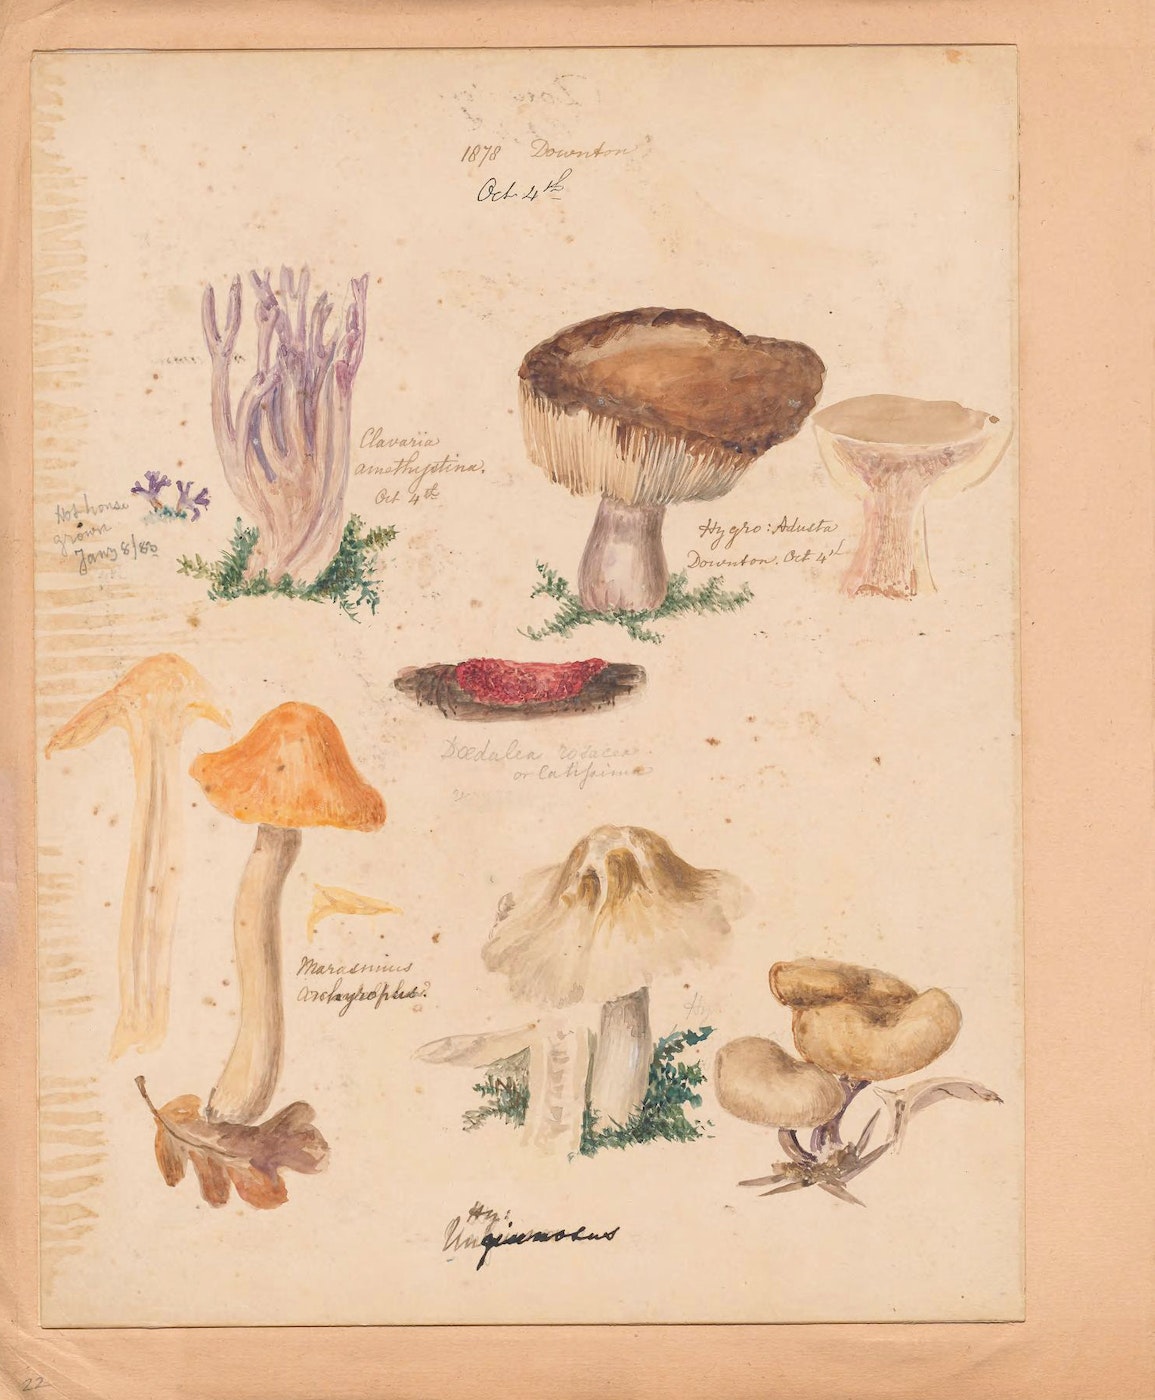 BBC - A History of the World - Object : A darning mushroom